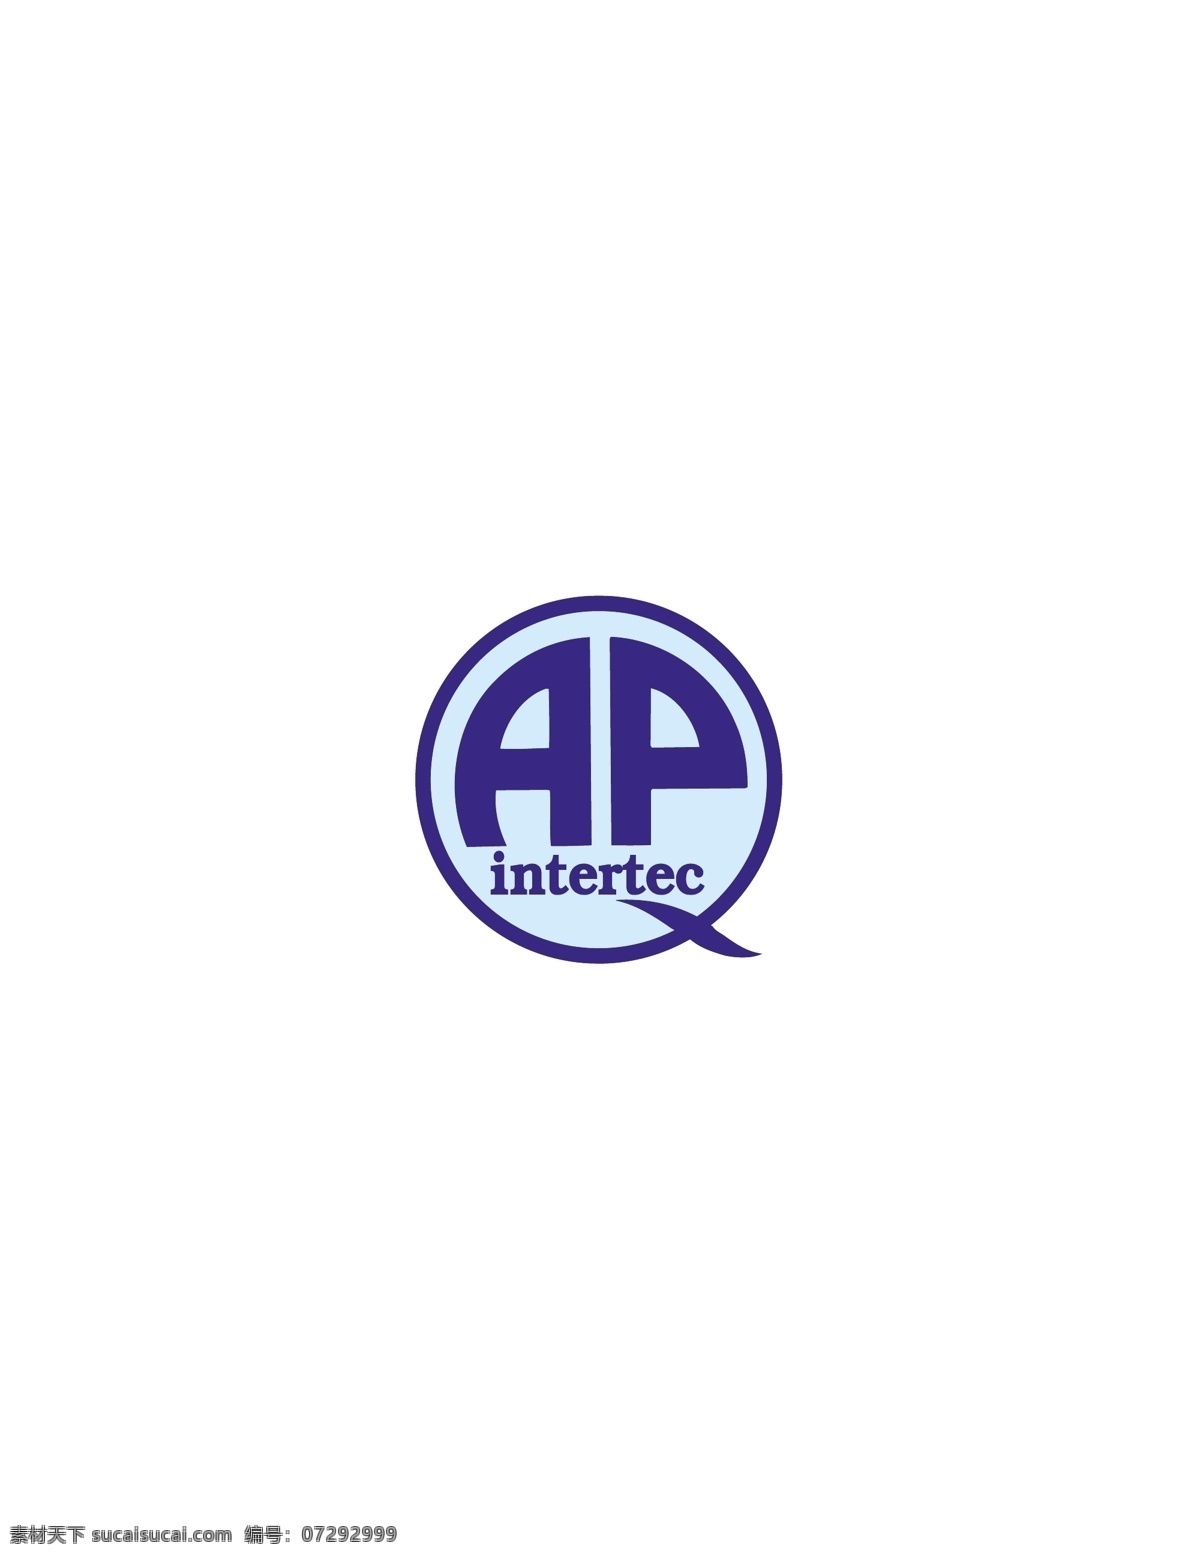 ap intertec logo 设计欣赏 标志设计 欣赏 矢量下载 网页矢量 商业矢量 logo大全 红色